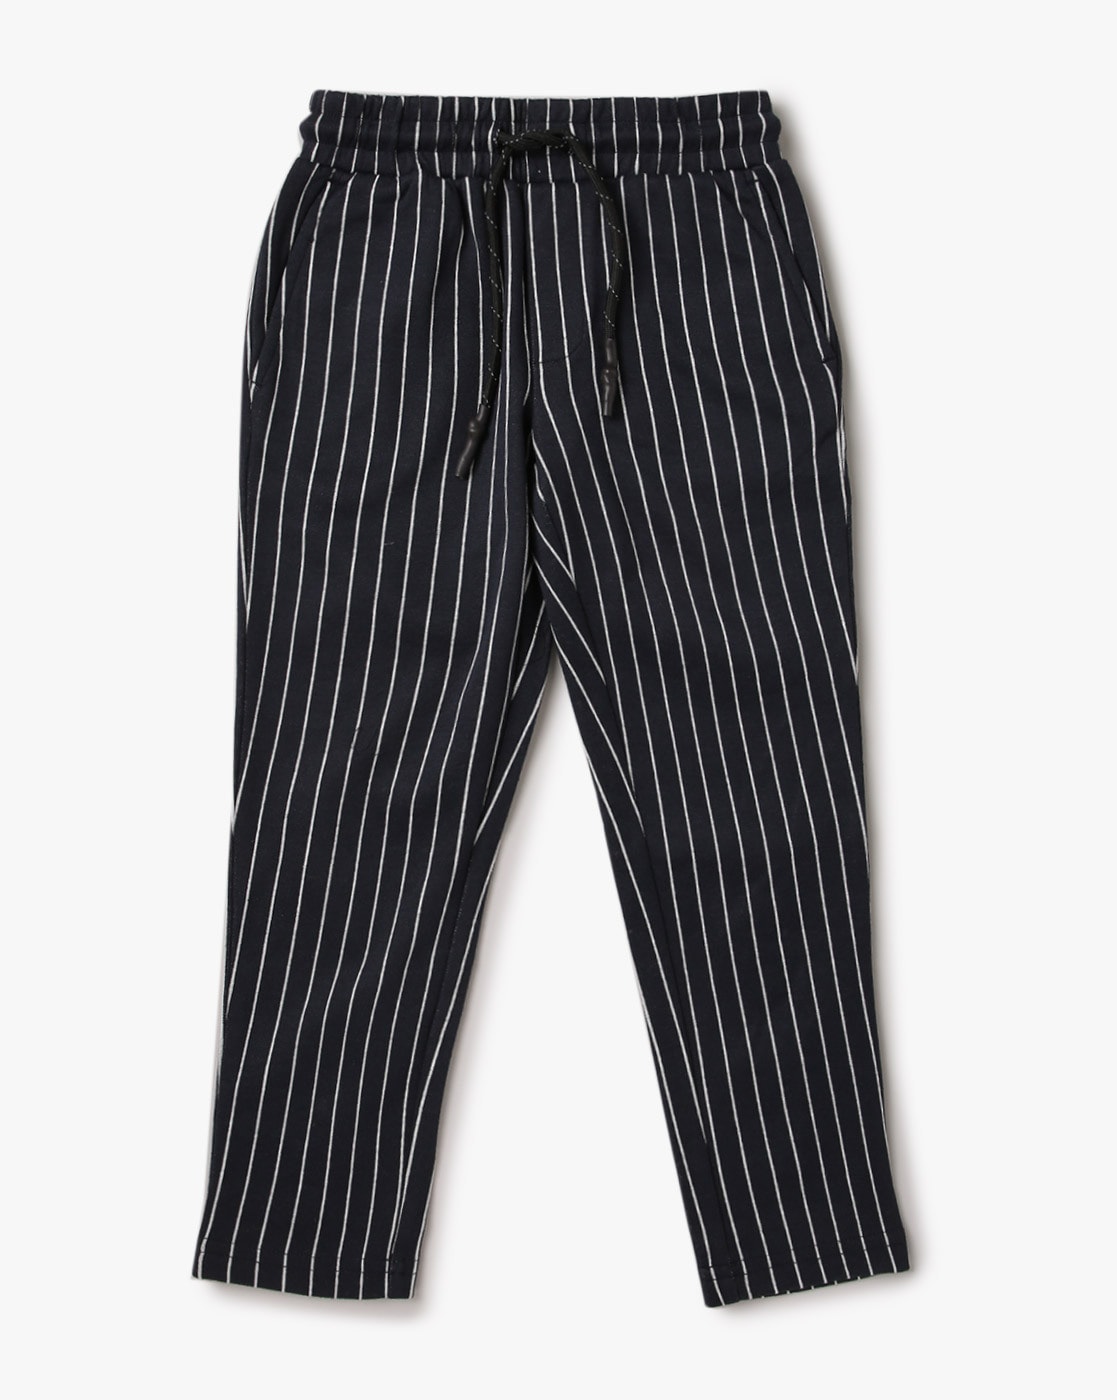 Jack  Jones Casual Trousers  Buy Jack  Jones Black Mid Rise Slim Fit  Trousers 44 OnlineNykaa fashion